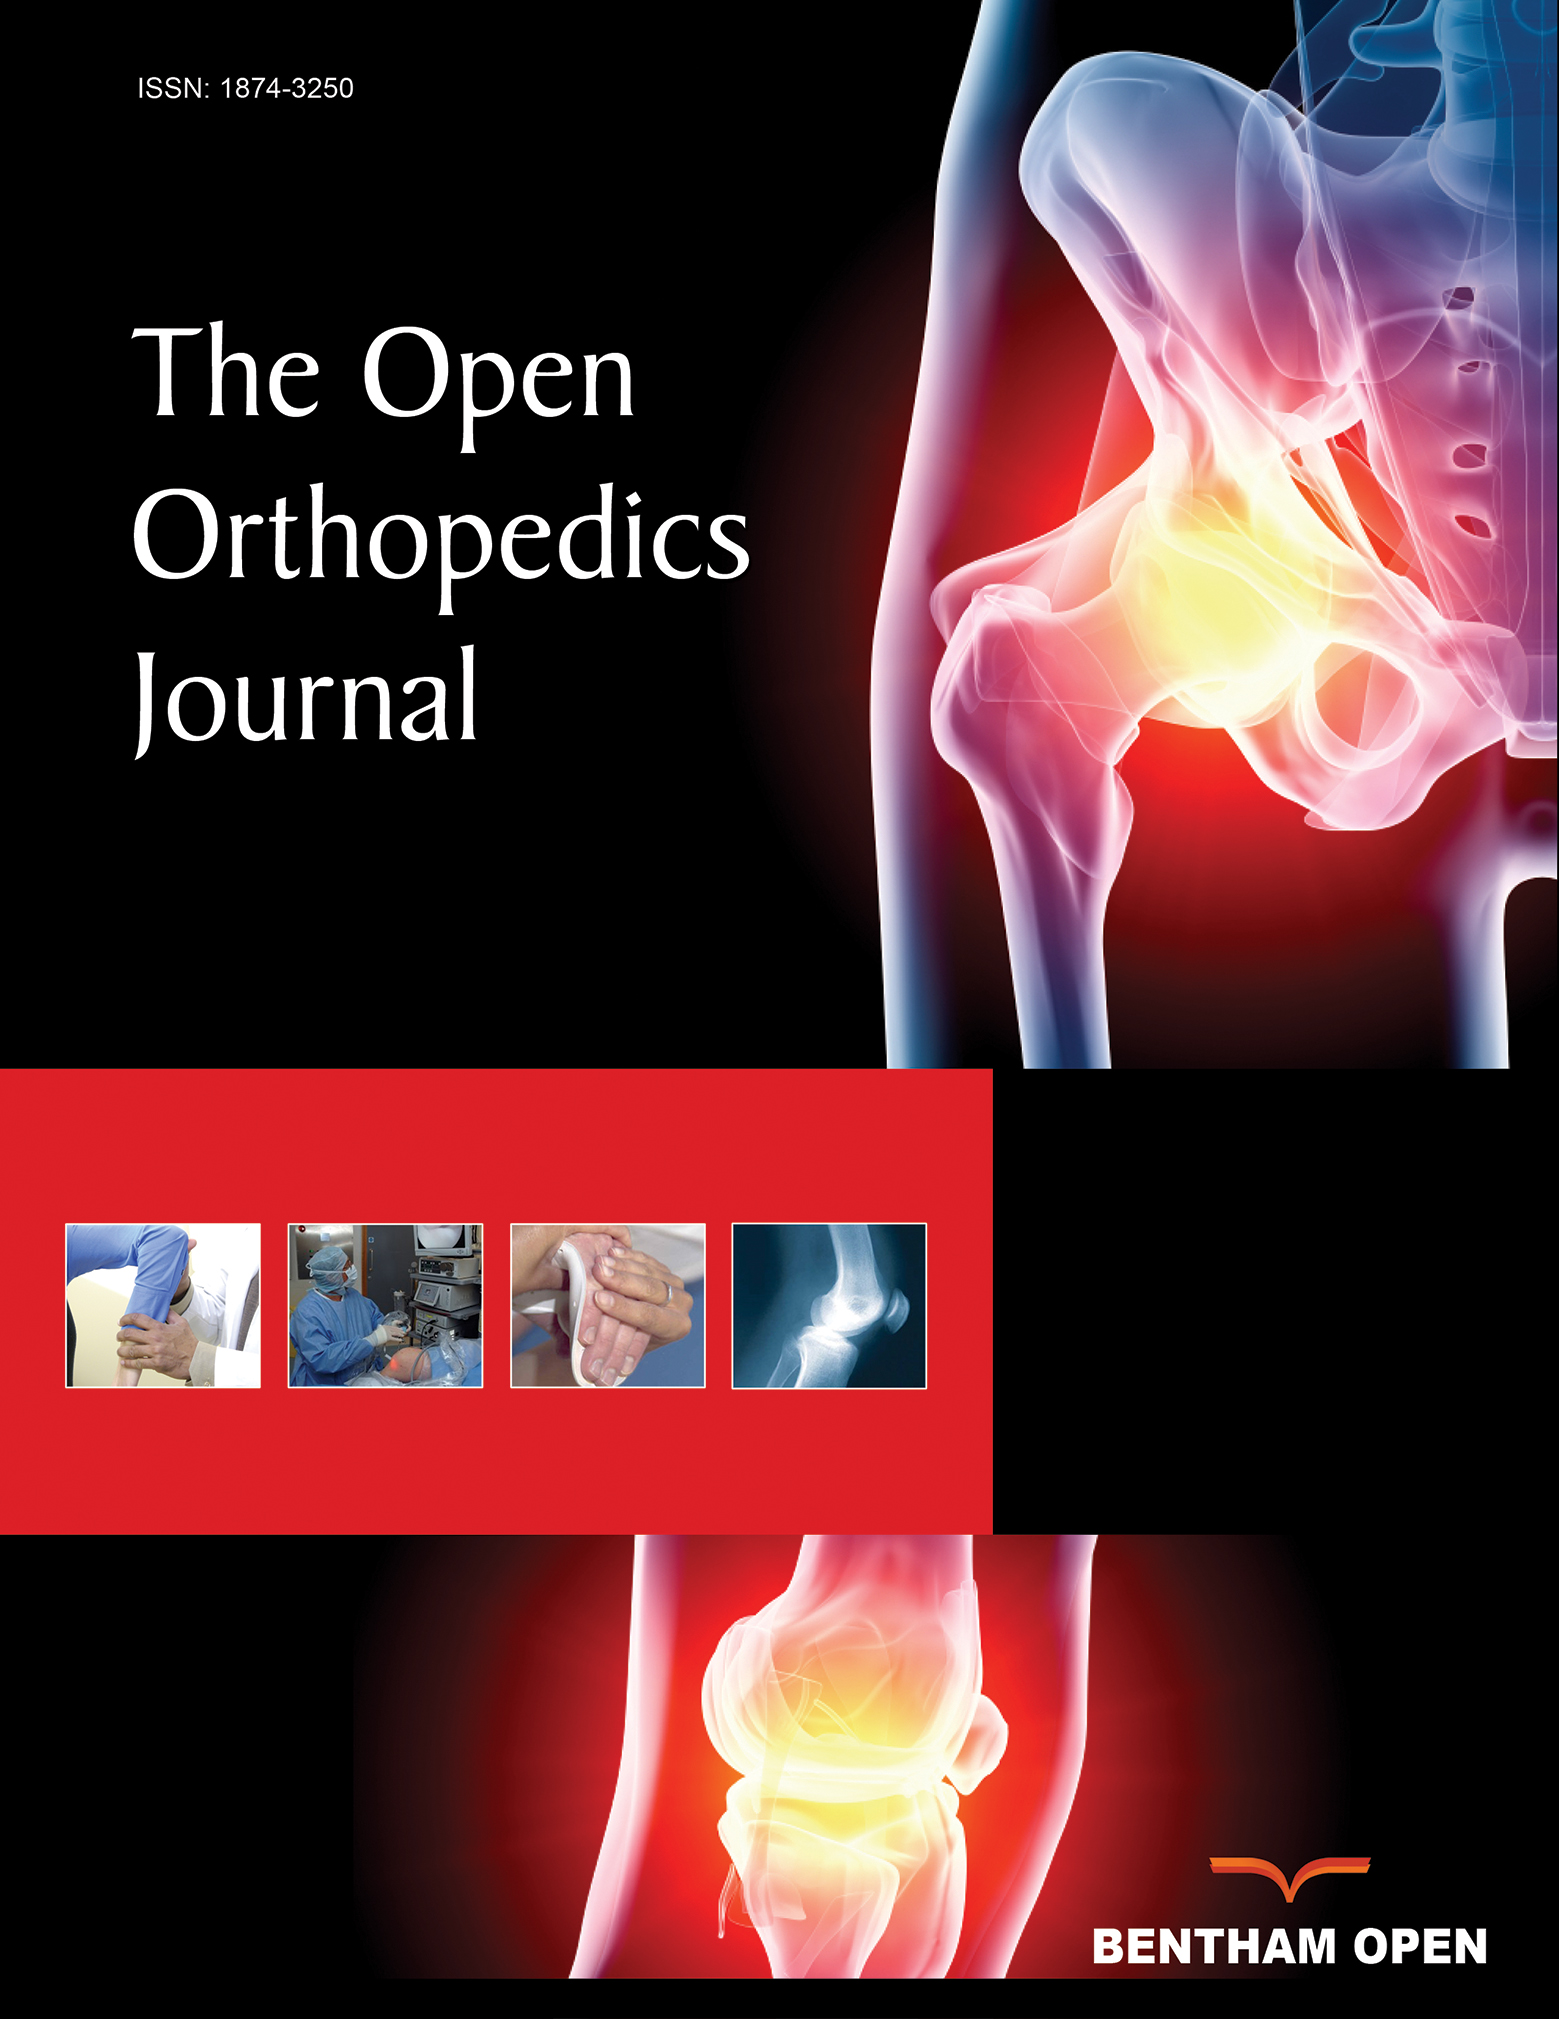 The Open Orthopaedics Journal